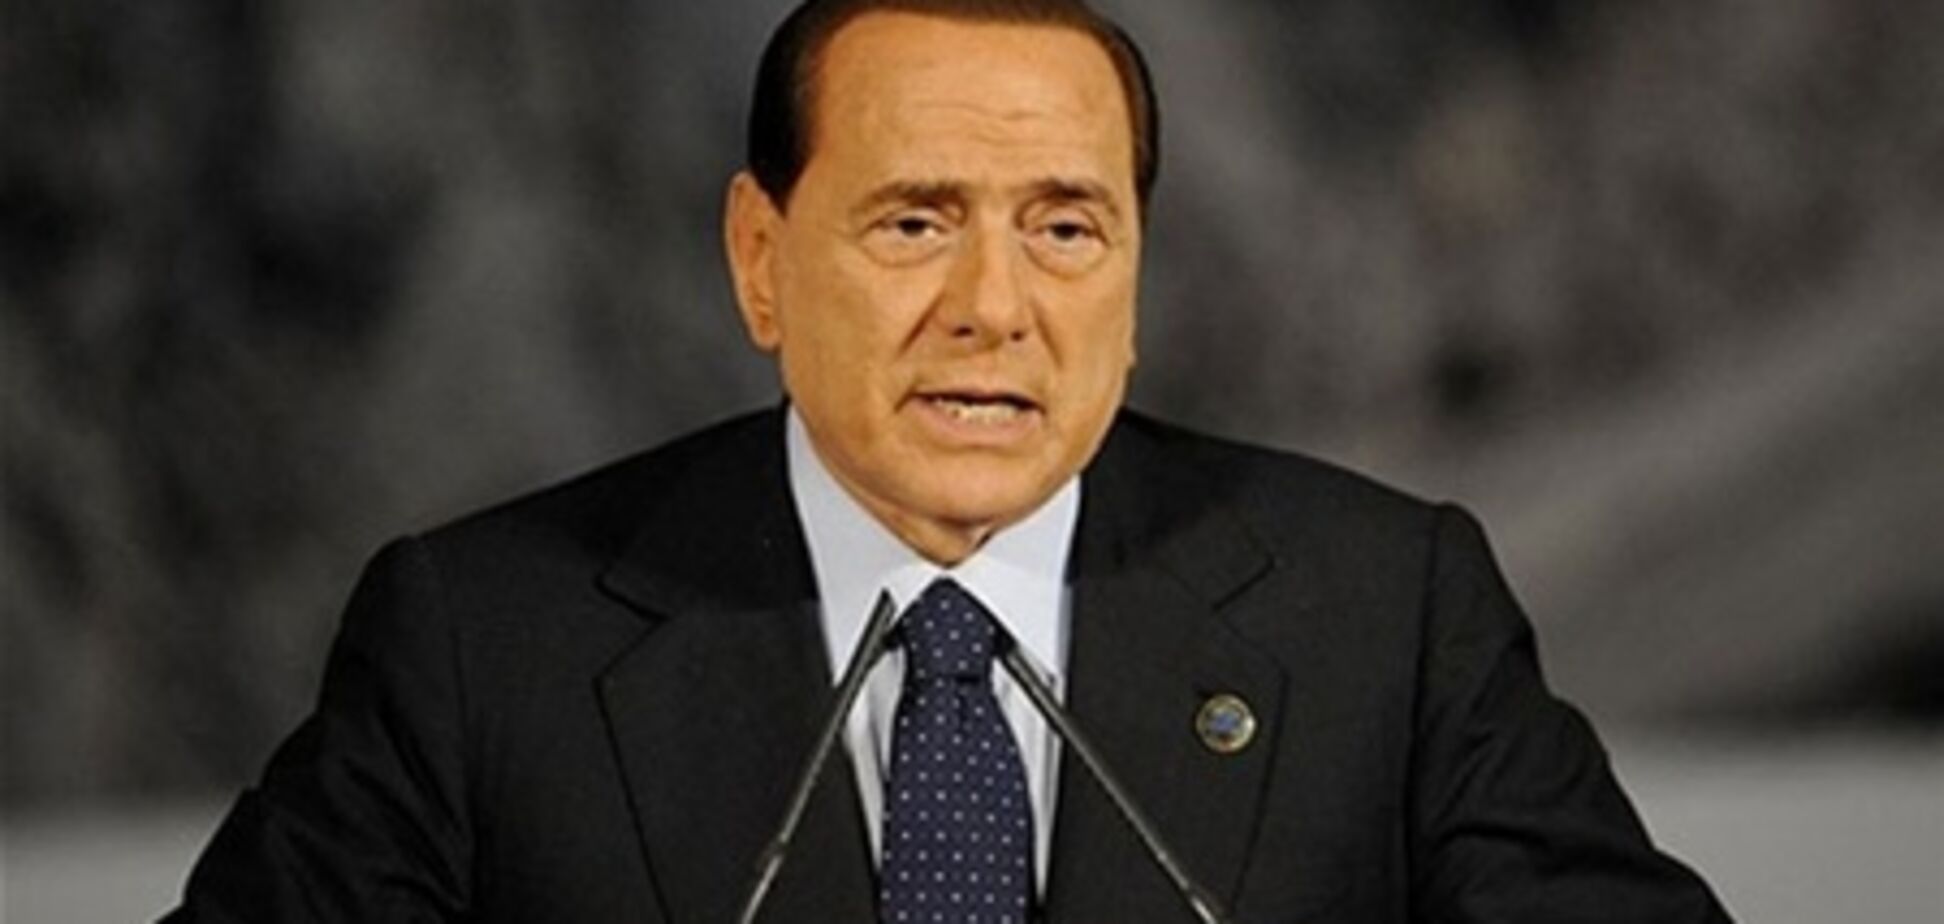 Берлускони: экономика Италии стоит на крепком фундаменте